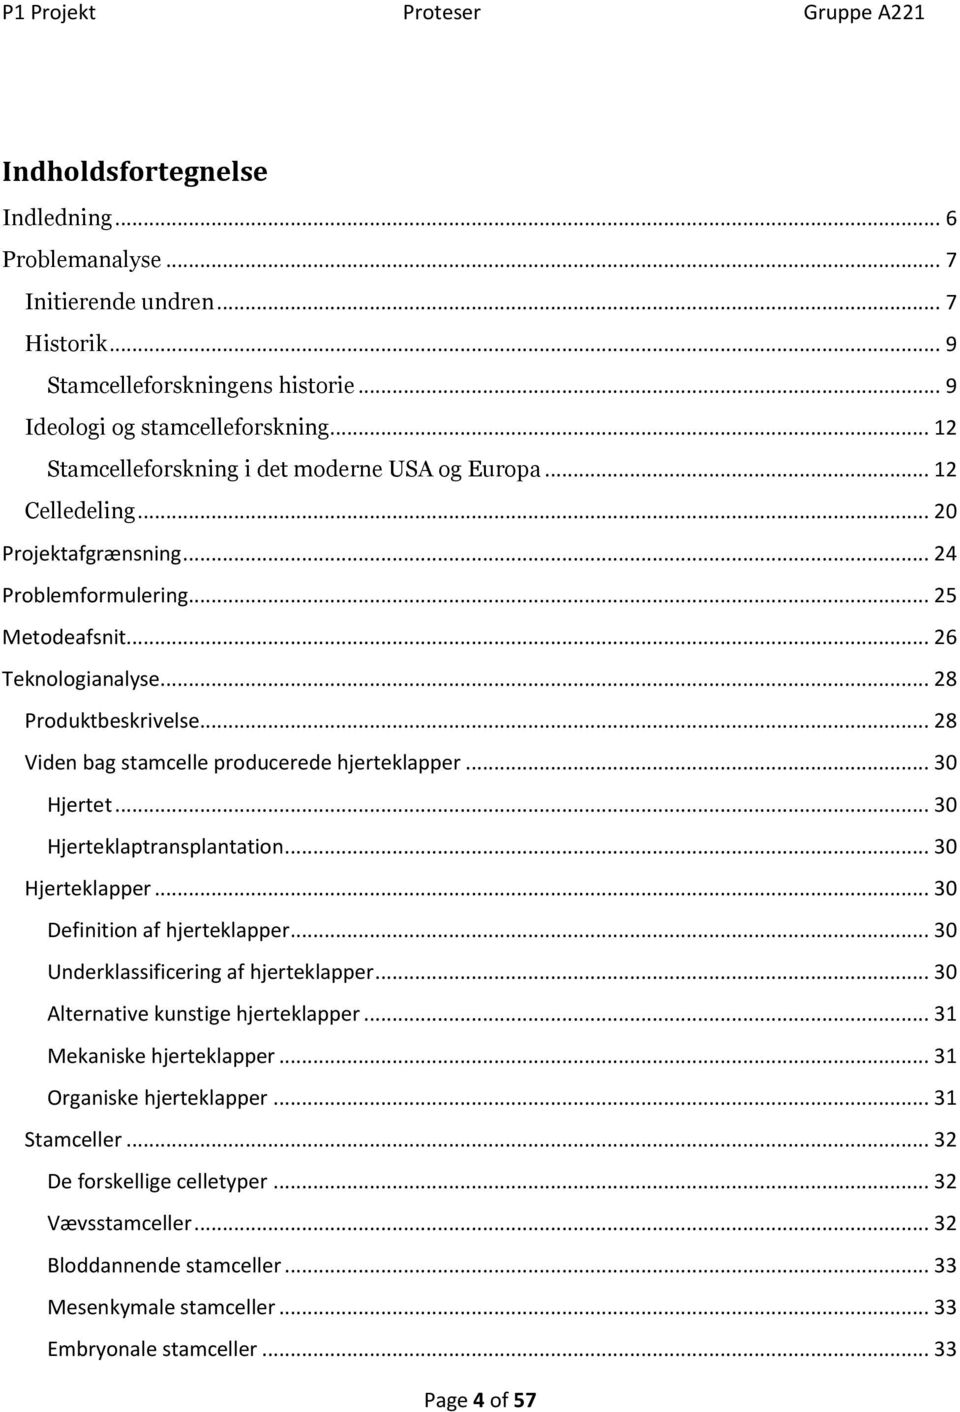 Proteser. Stamceller og hjerteklapper A221 12/17/2013. Af: Andreas  Raffeldt, Daniel Laursen, Jesper B. Laumann, - PDF Free Download